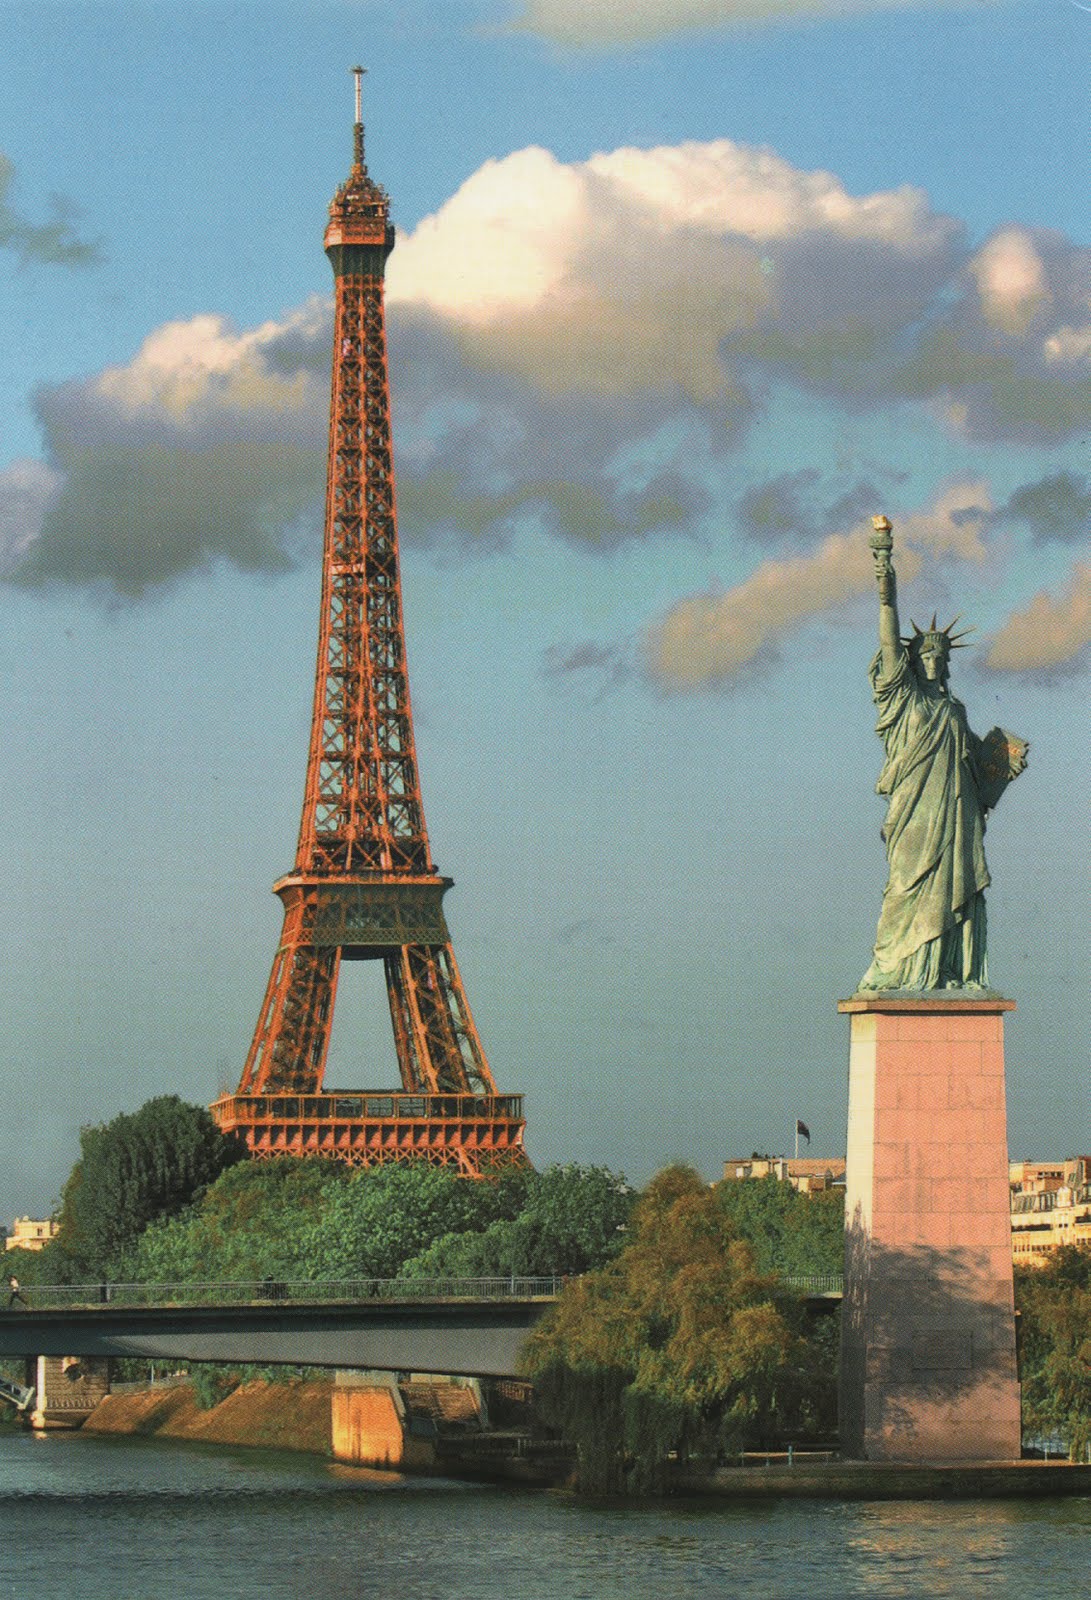 Statue of Liberty vs. Eiffeltower - Comparison of sizes